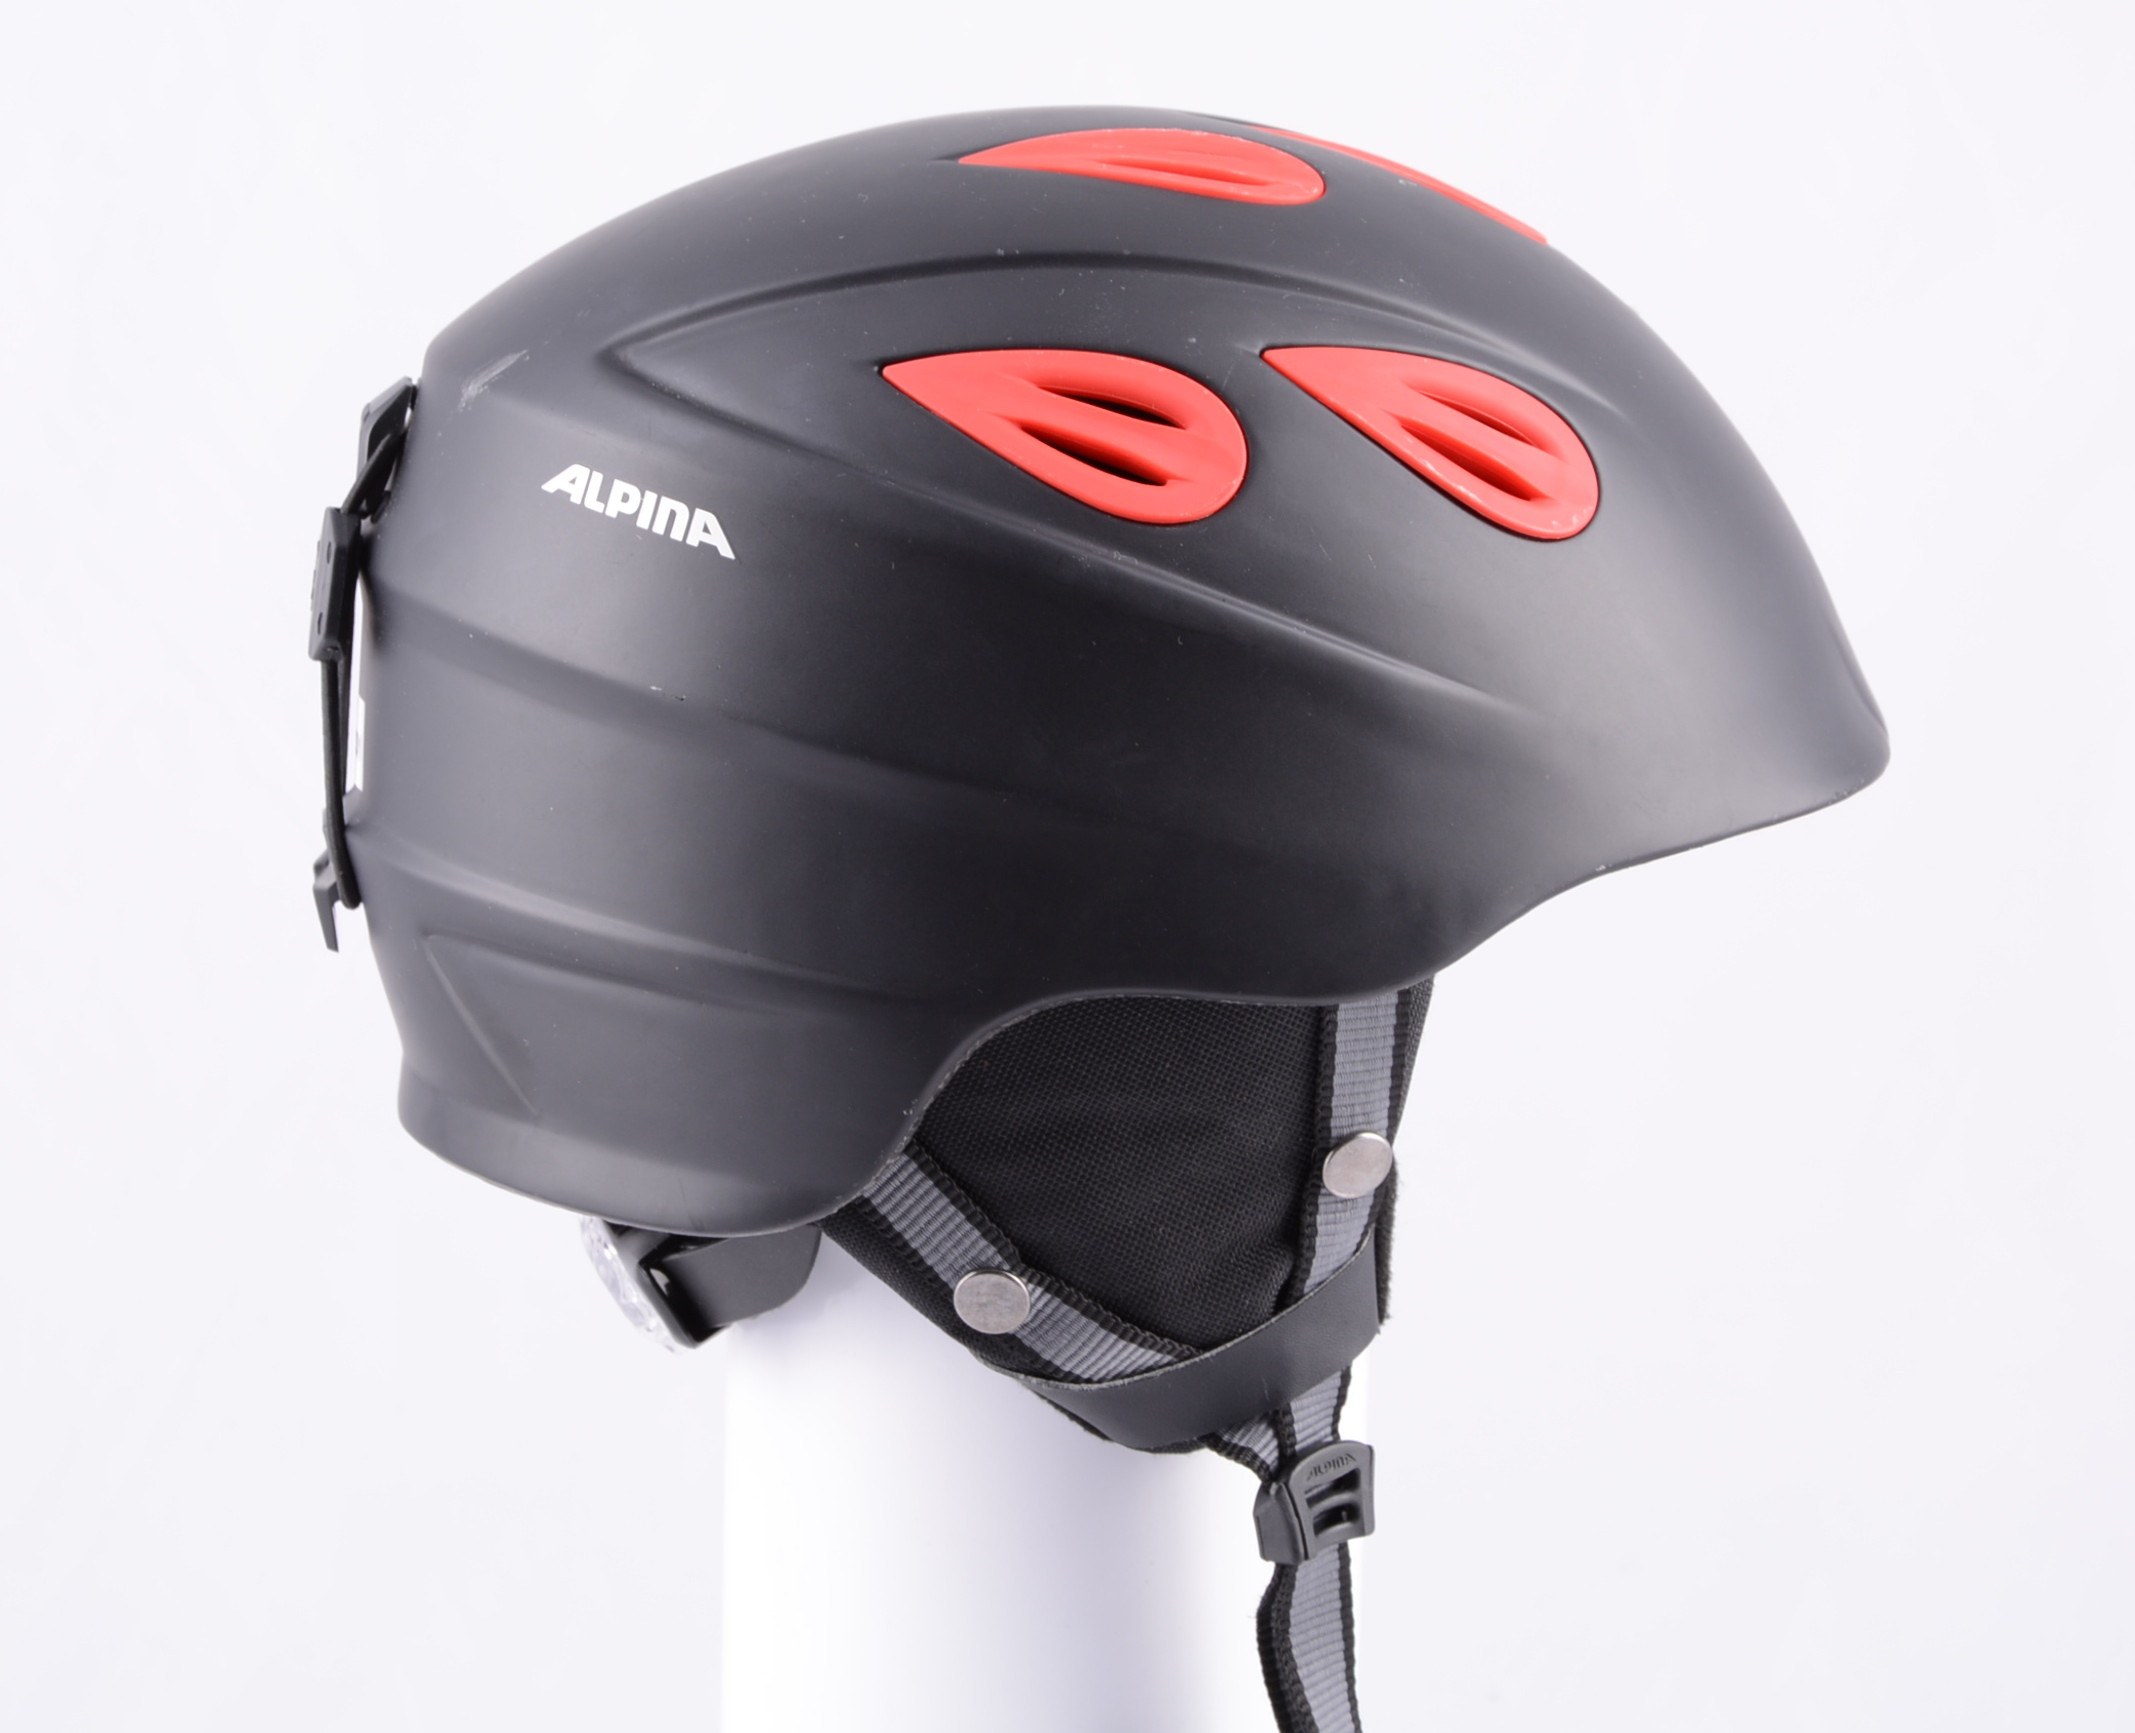 Leerling Detector De controle krijgen ski/snowboard helmet ALPINA JUNTA 2.0 black/red 2019, adjustable -  Mardosport.com